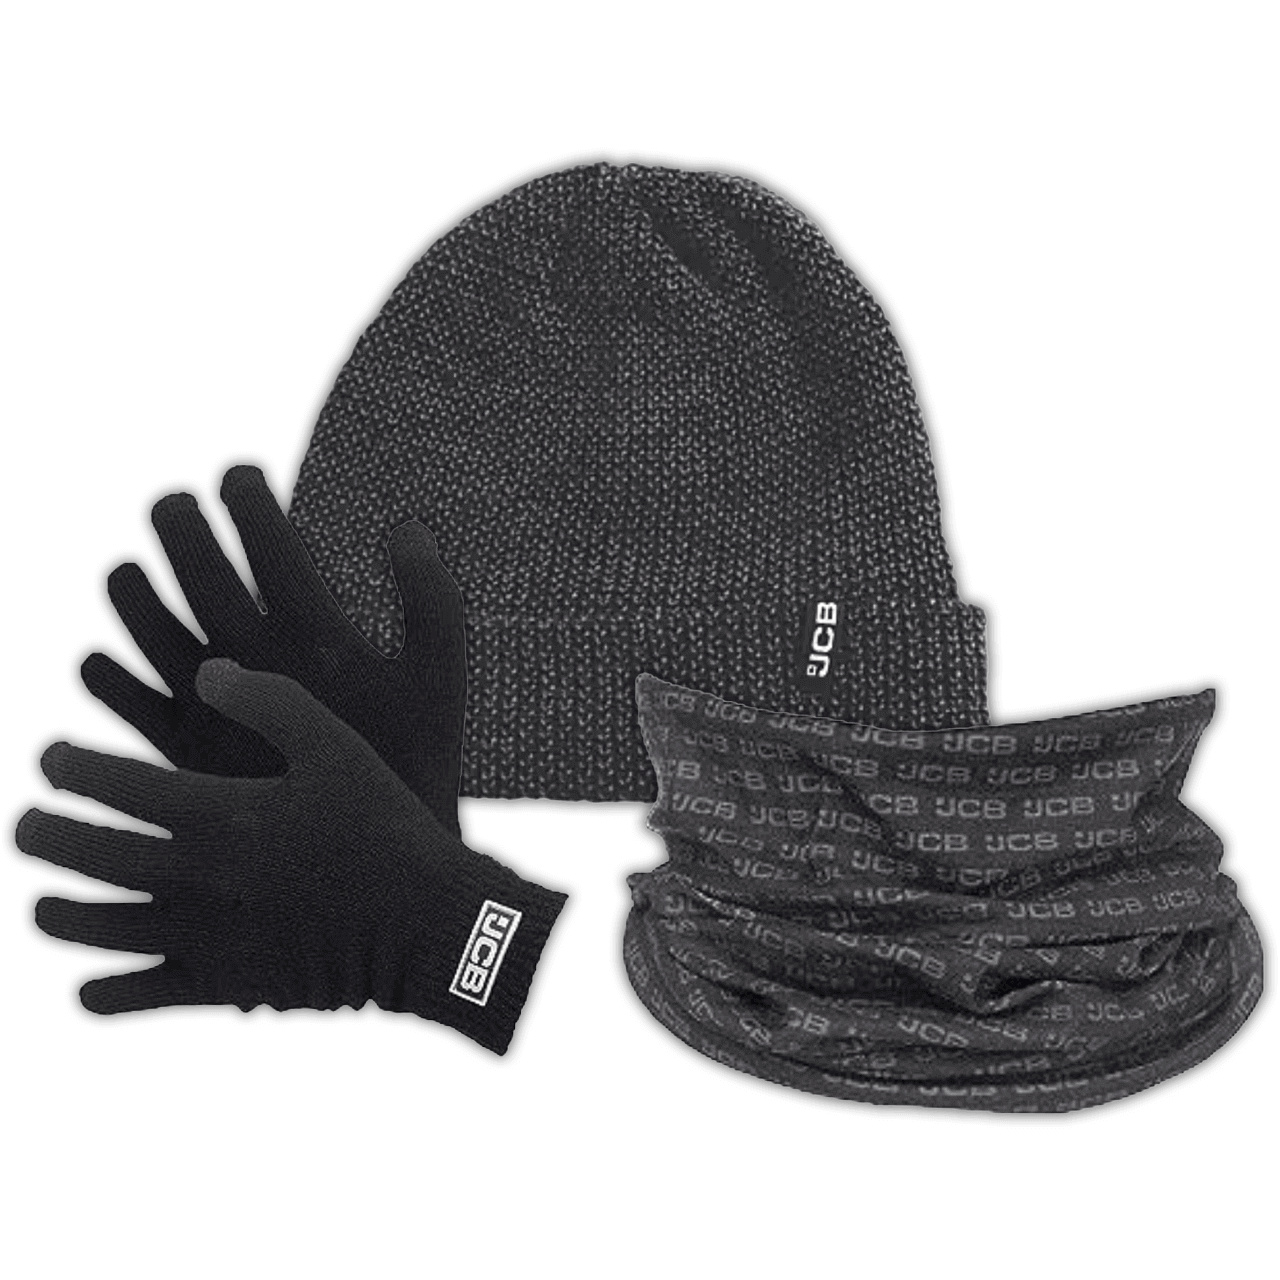 JCB Winter Set - Gloves, Beanie Hat, and Snood